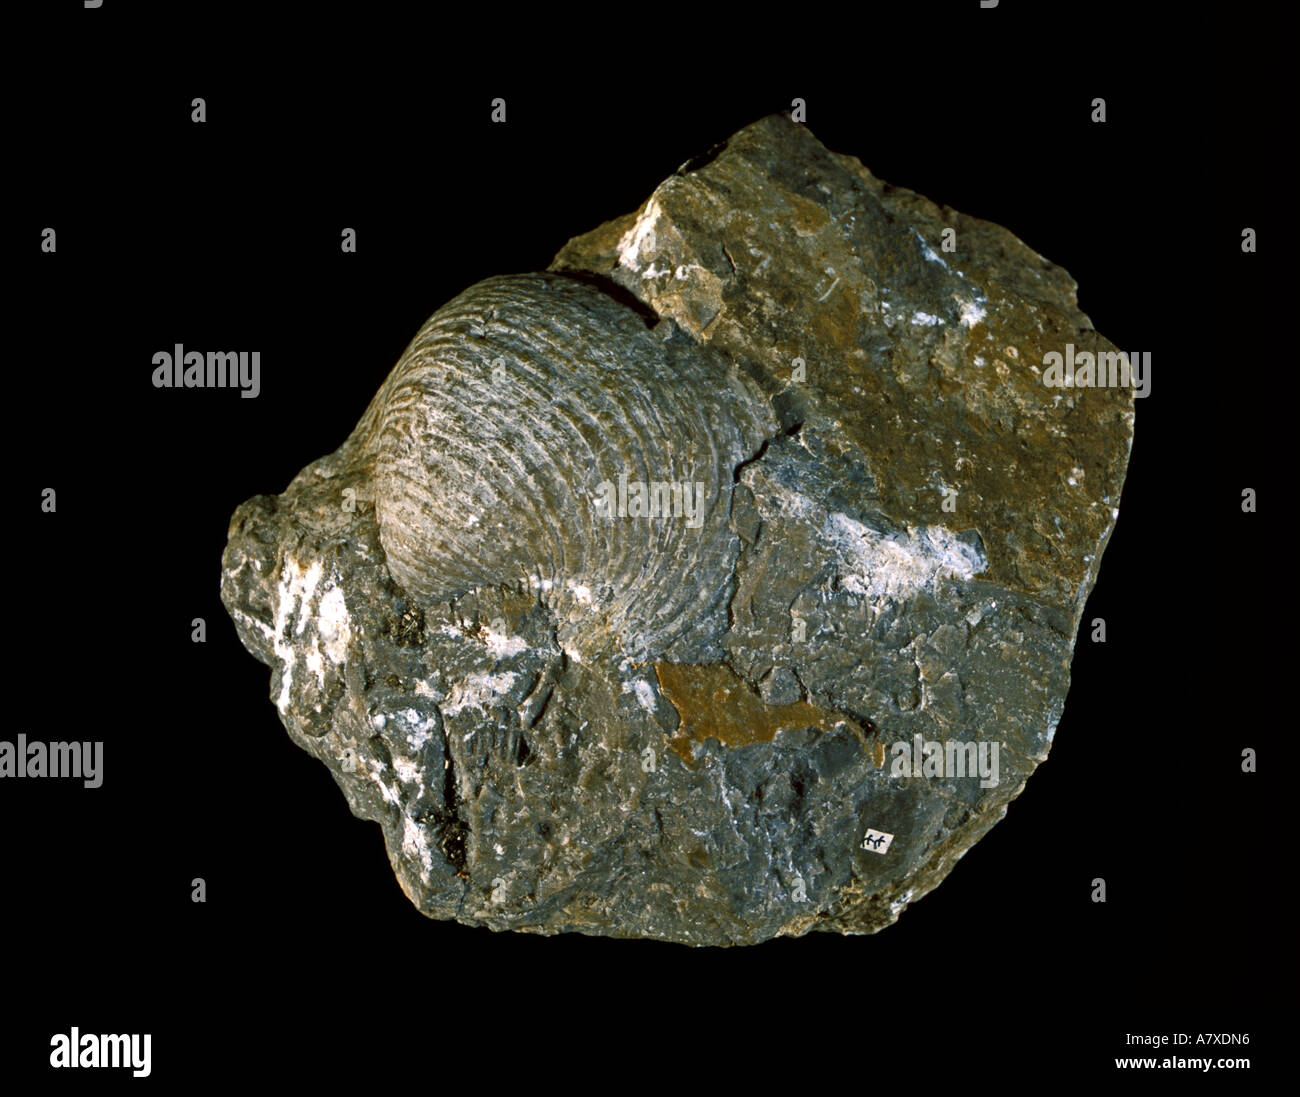 Fossil Brachipod Productus sp Lower Carboniferous Limestone Whitewell Lancashire England 5cm across Stock Photo